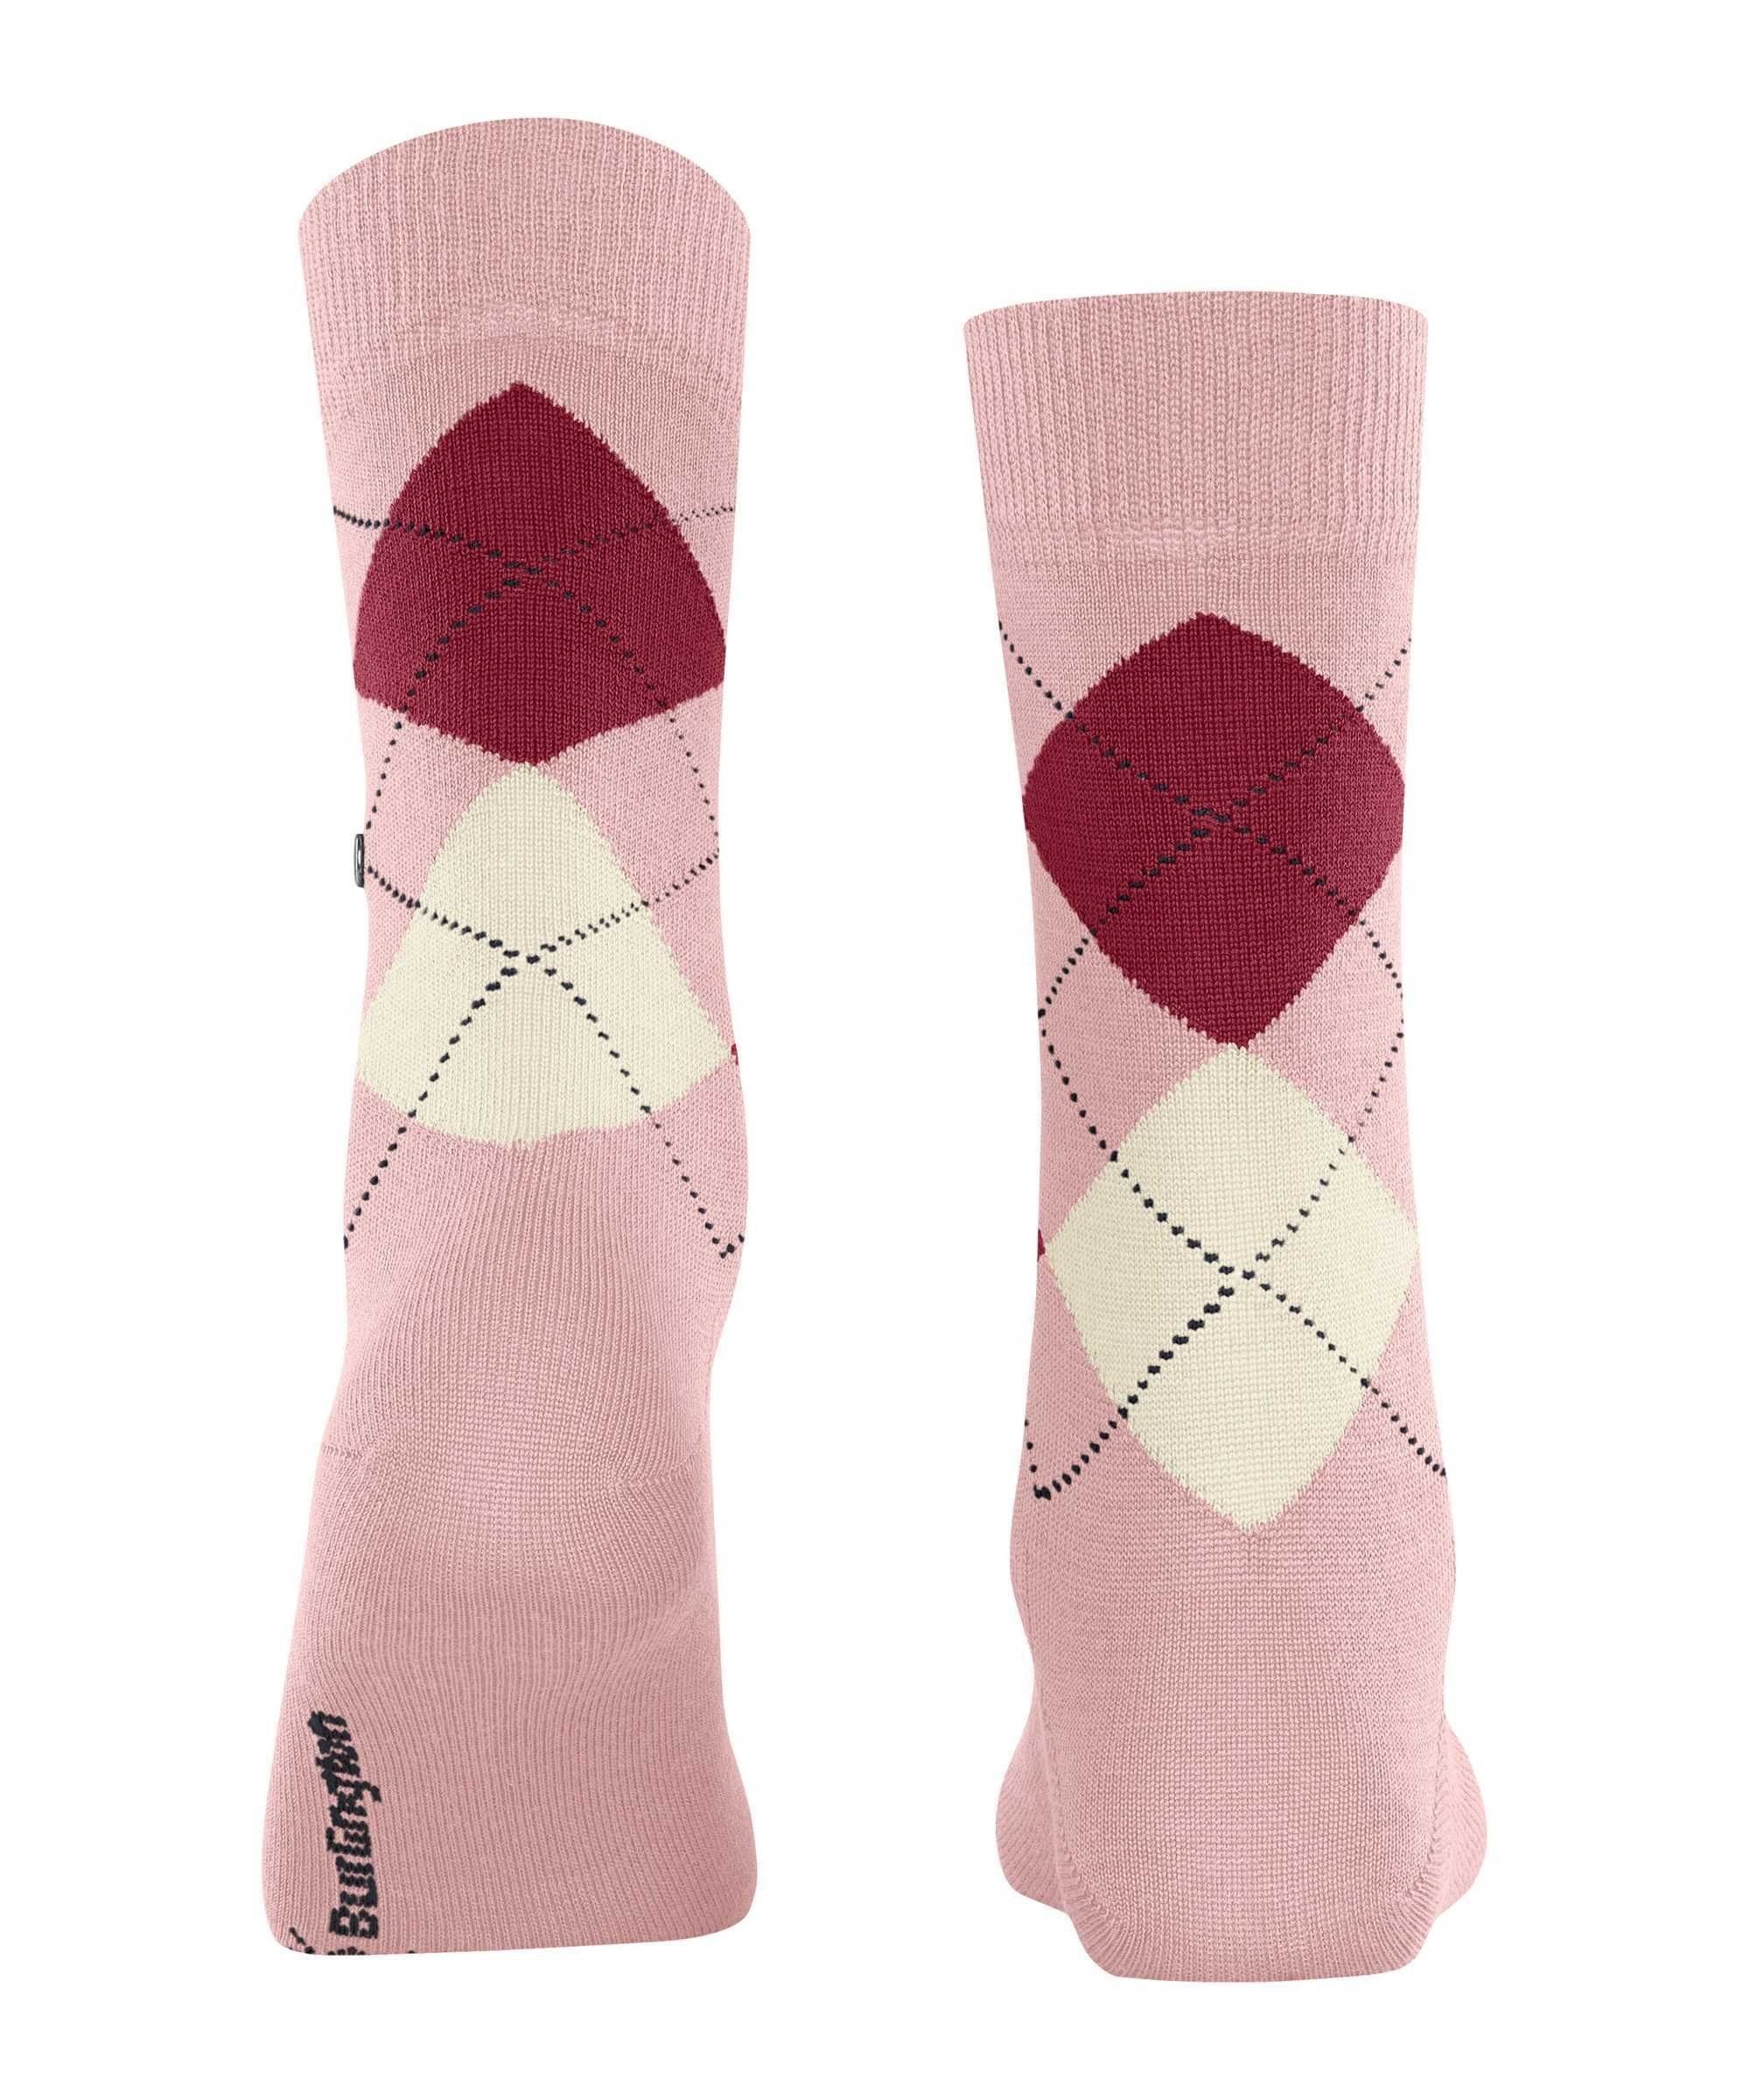 Kurzstrumpf Damen Socken Burlington - Kurzsocken Rosa/Rot/Weiß MARYLEBONE